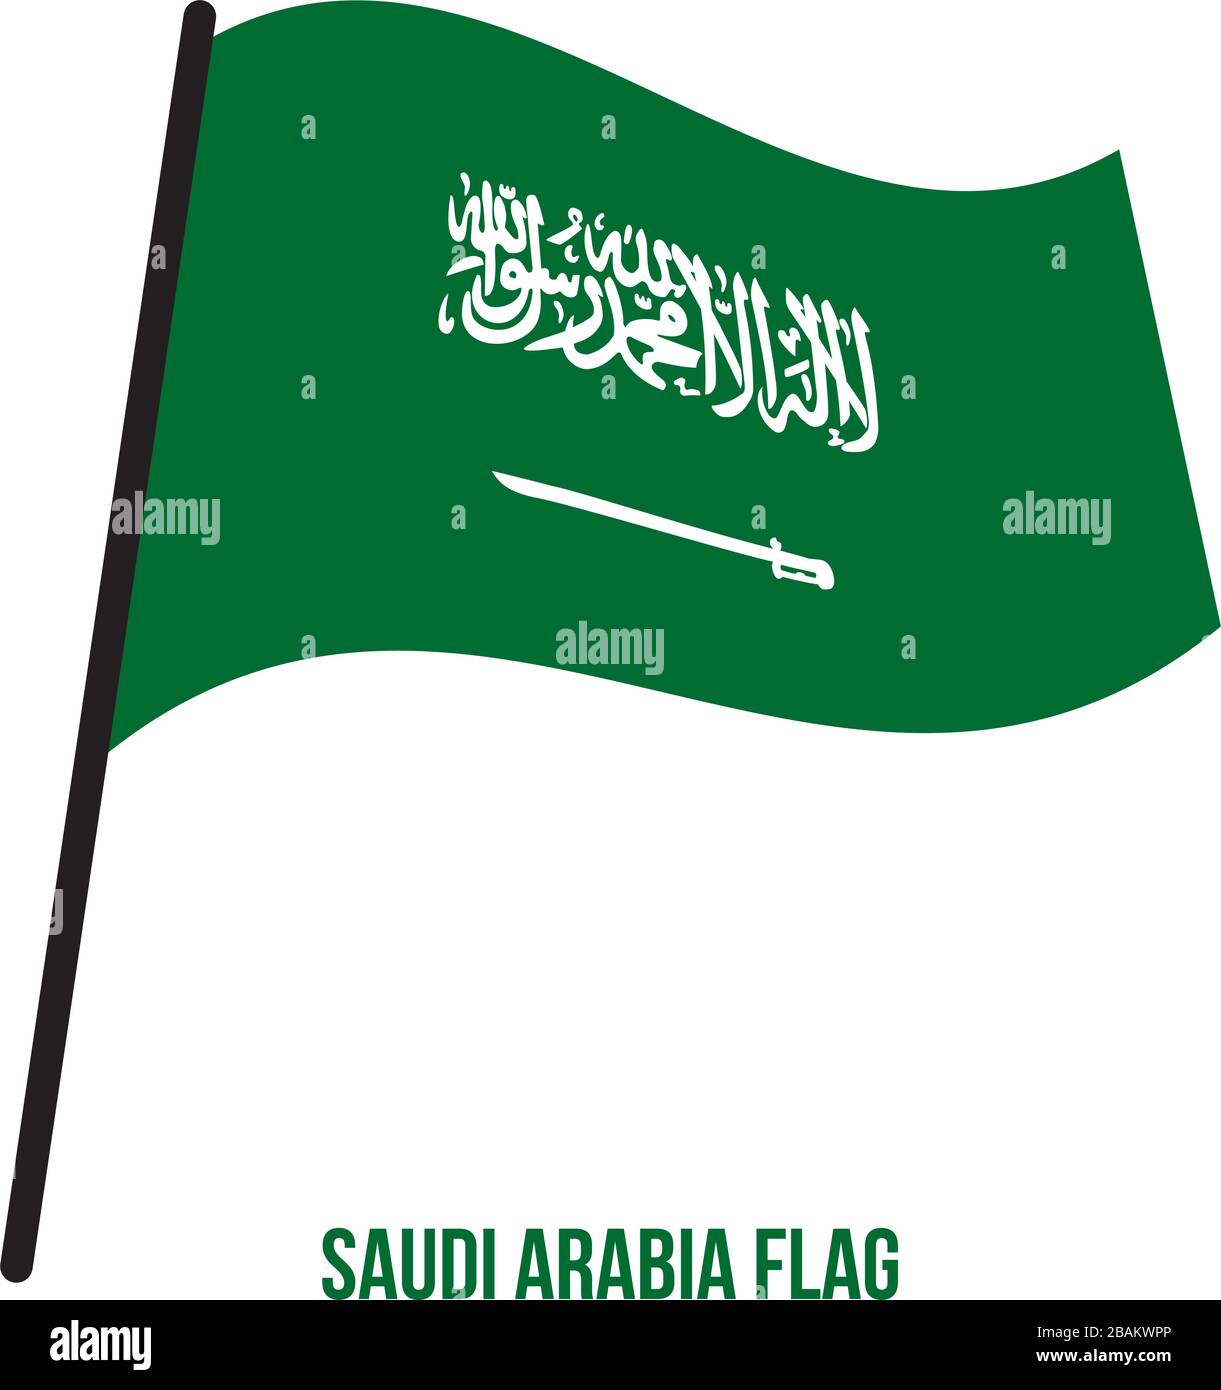 Saudi arabia flag Stock Vector Images - Alamy